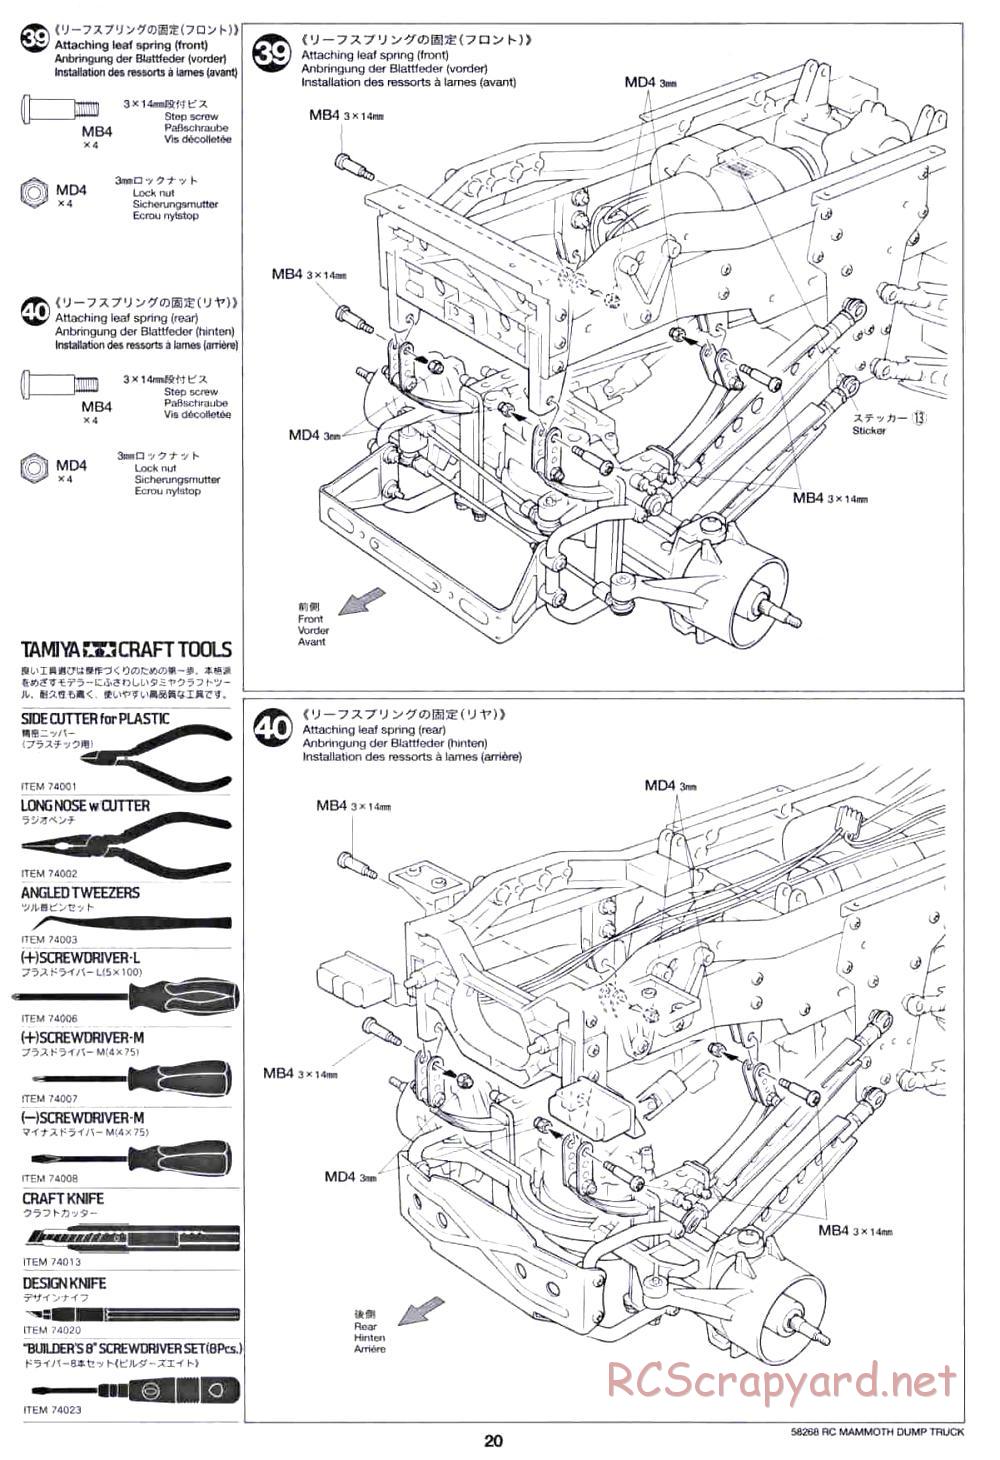 Tamiya - Mammoth Dump Truck Chassis - Manual - Page 20